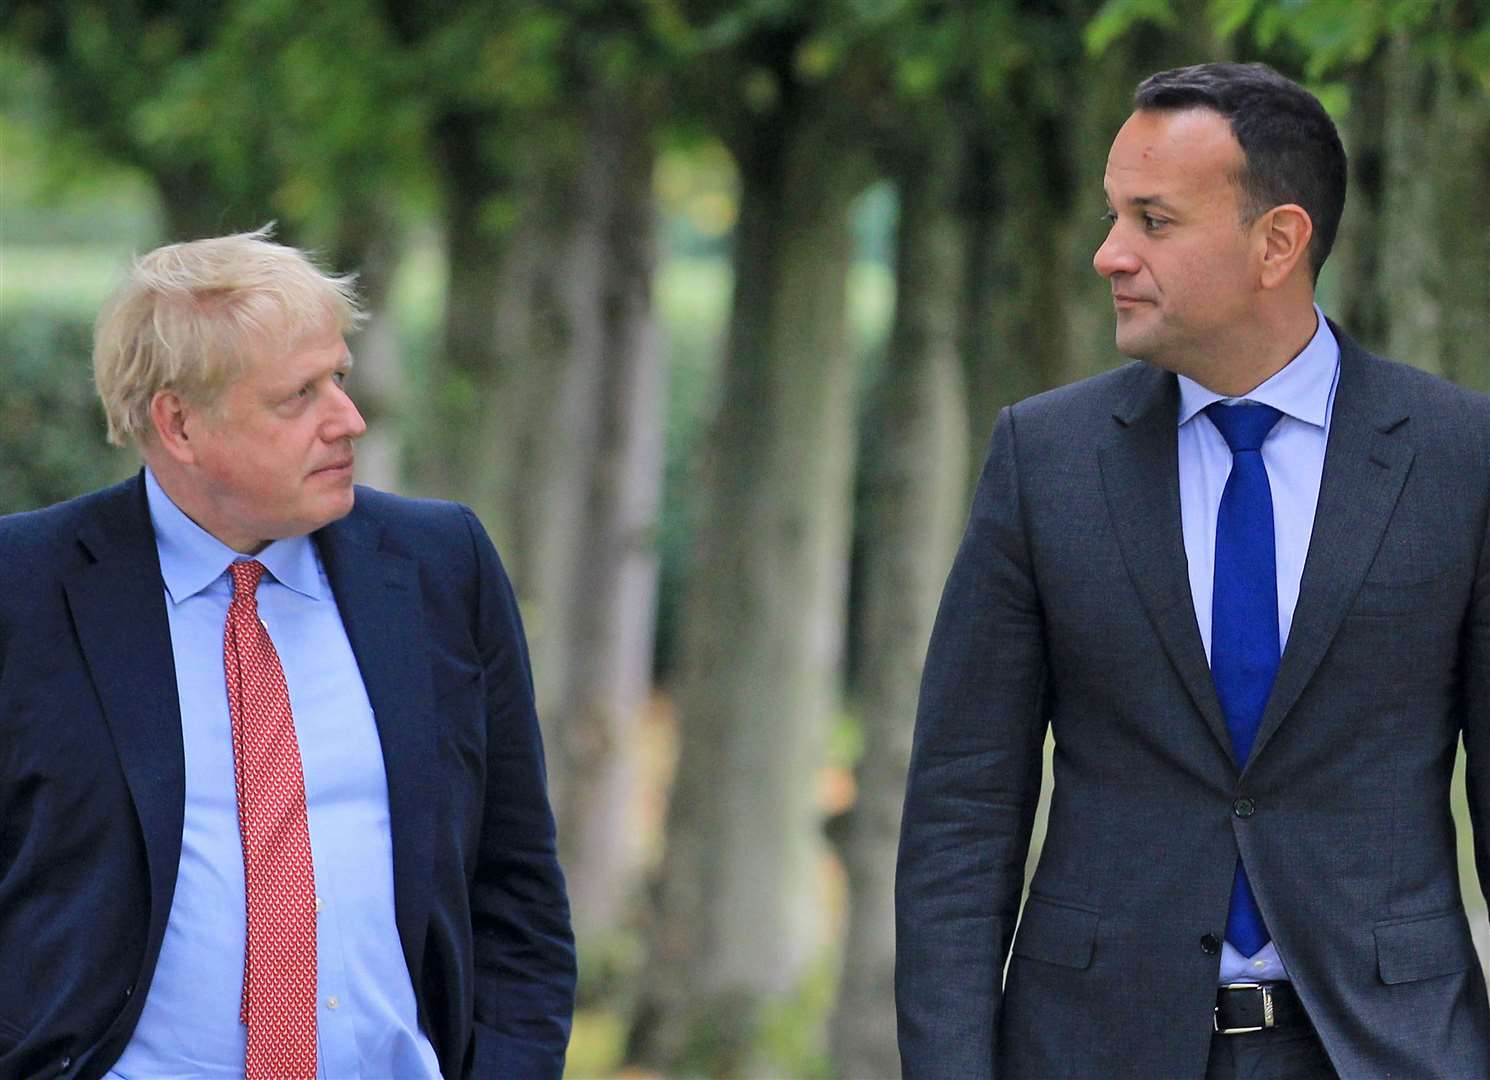 A meeting between Leo Varadkar and Boris Johnson helped break the deadlock in 2019 to secure a UK-EU Brexit deal